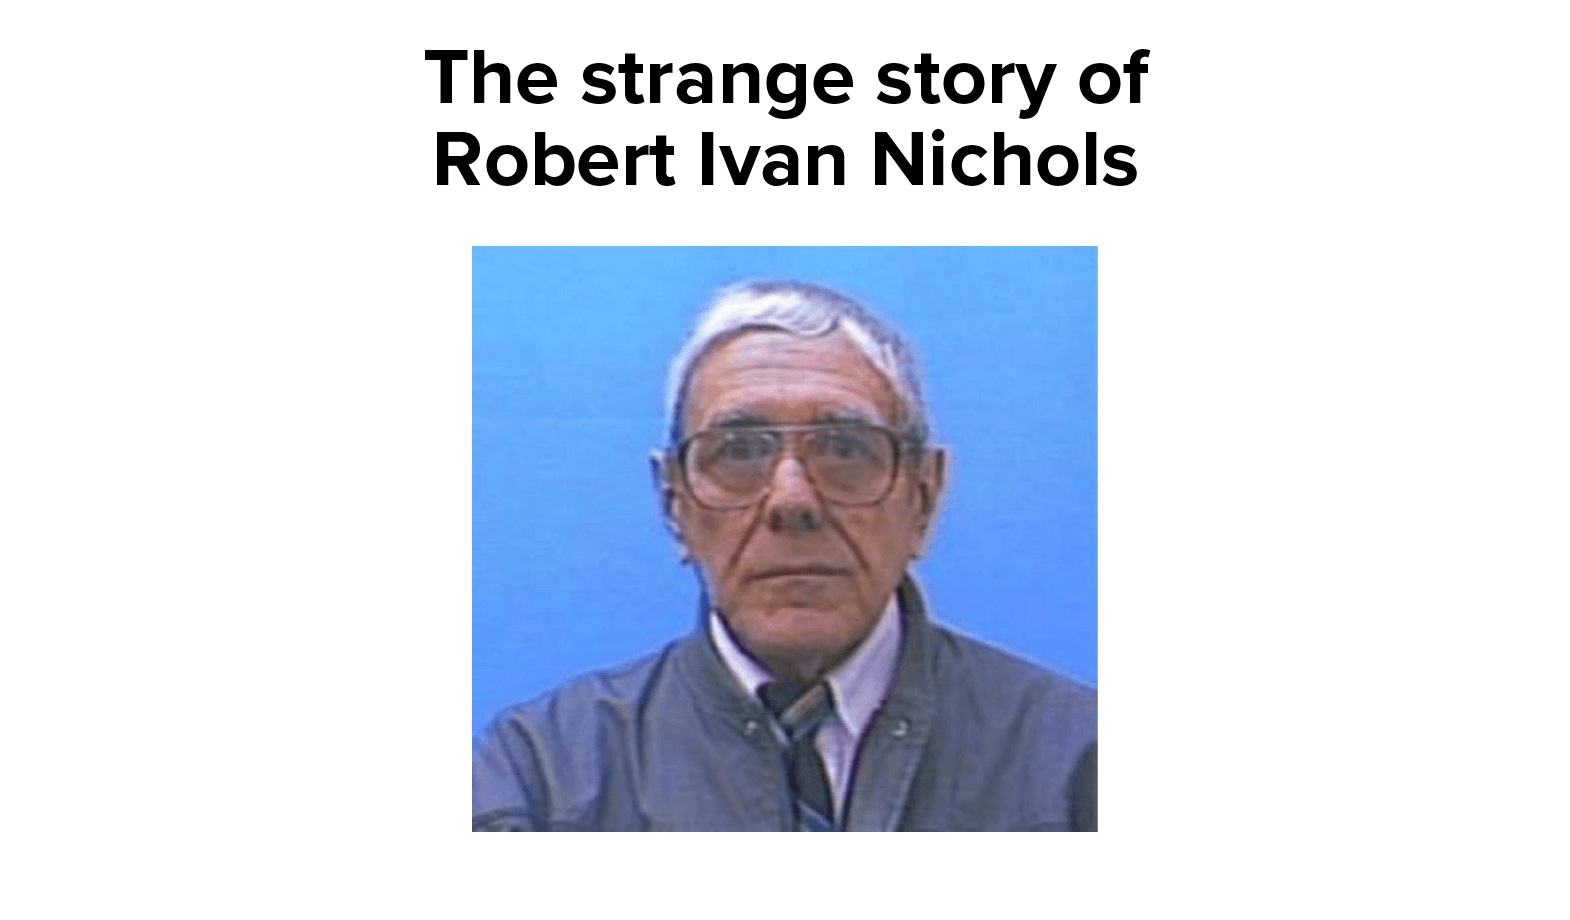 The strange story of Robert Ivan Nichols